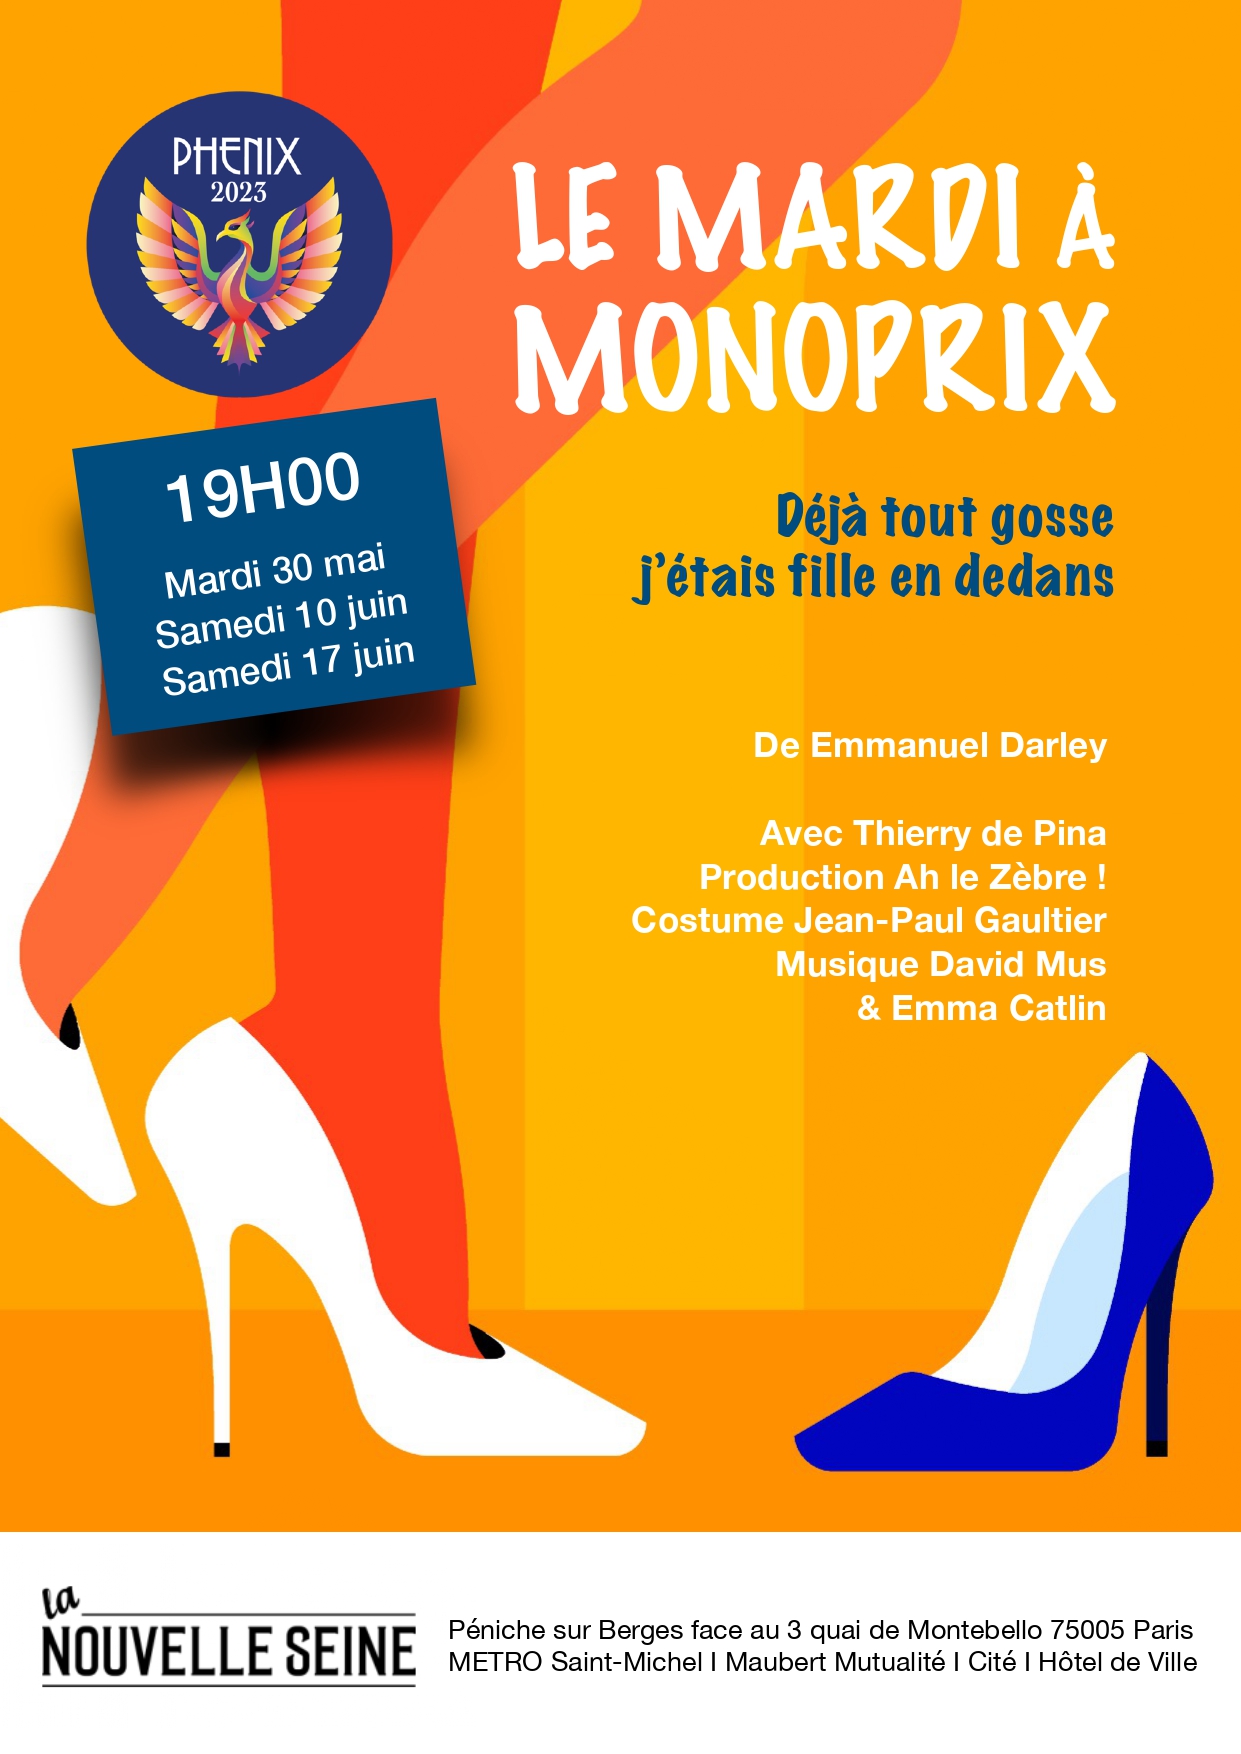 phenix-festival-le-mardi-a-monoprix-2